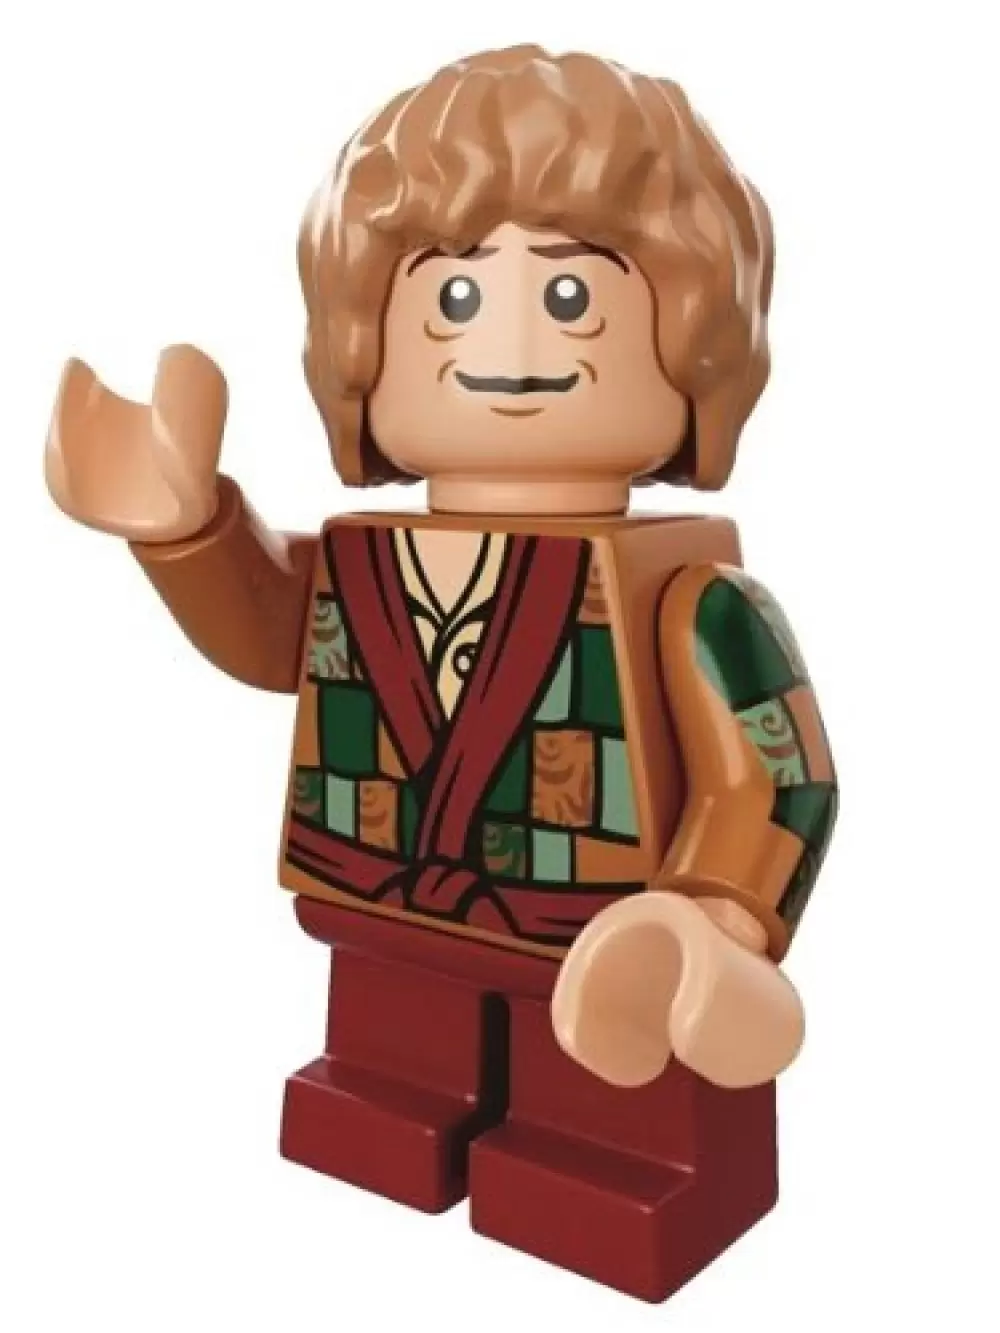 LEGO The Hobbit - Good Morning Bilbo Baggins